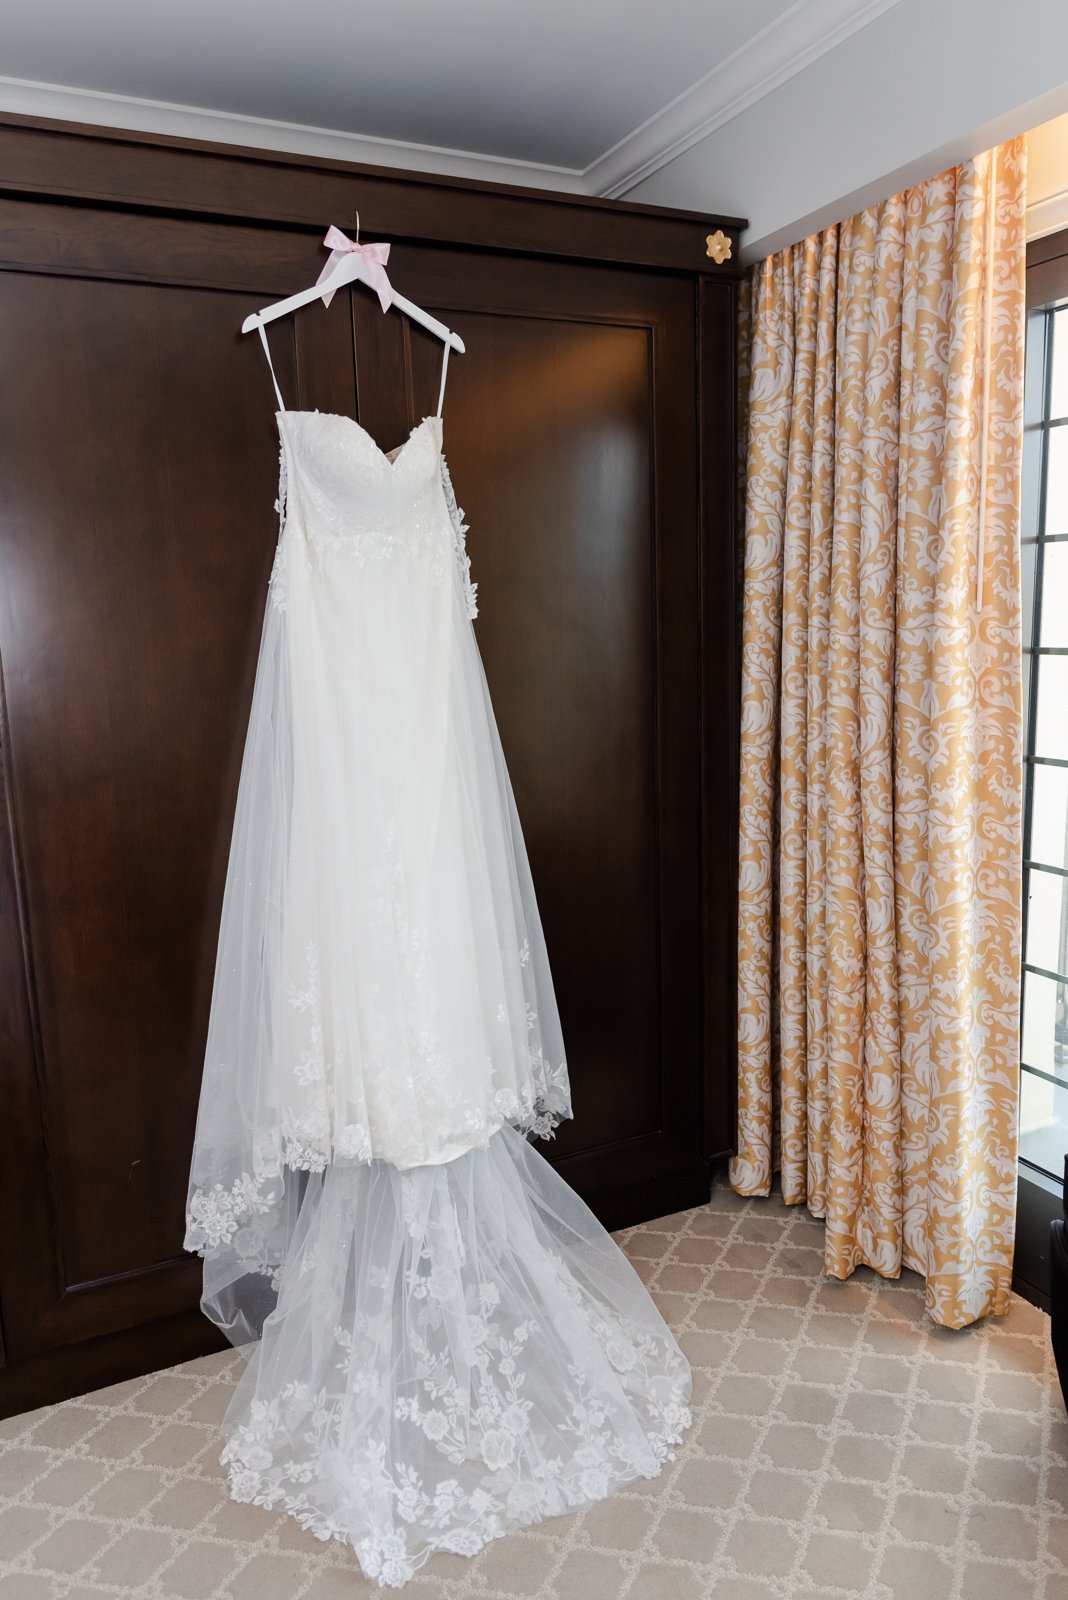  wedding dress hanging in hotel carmichael 